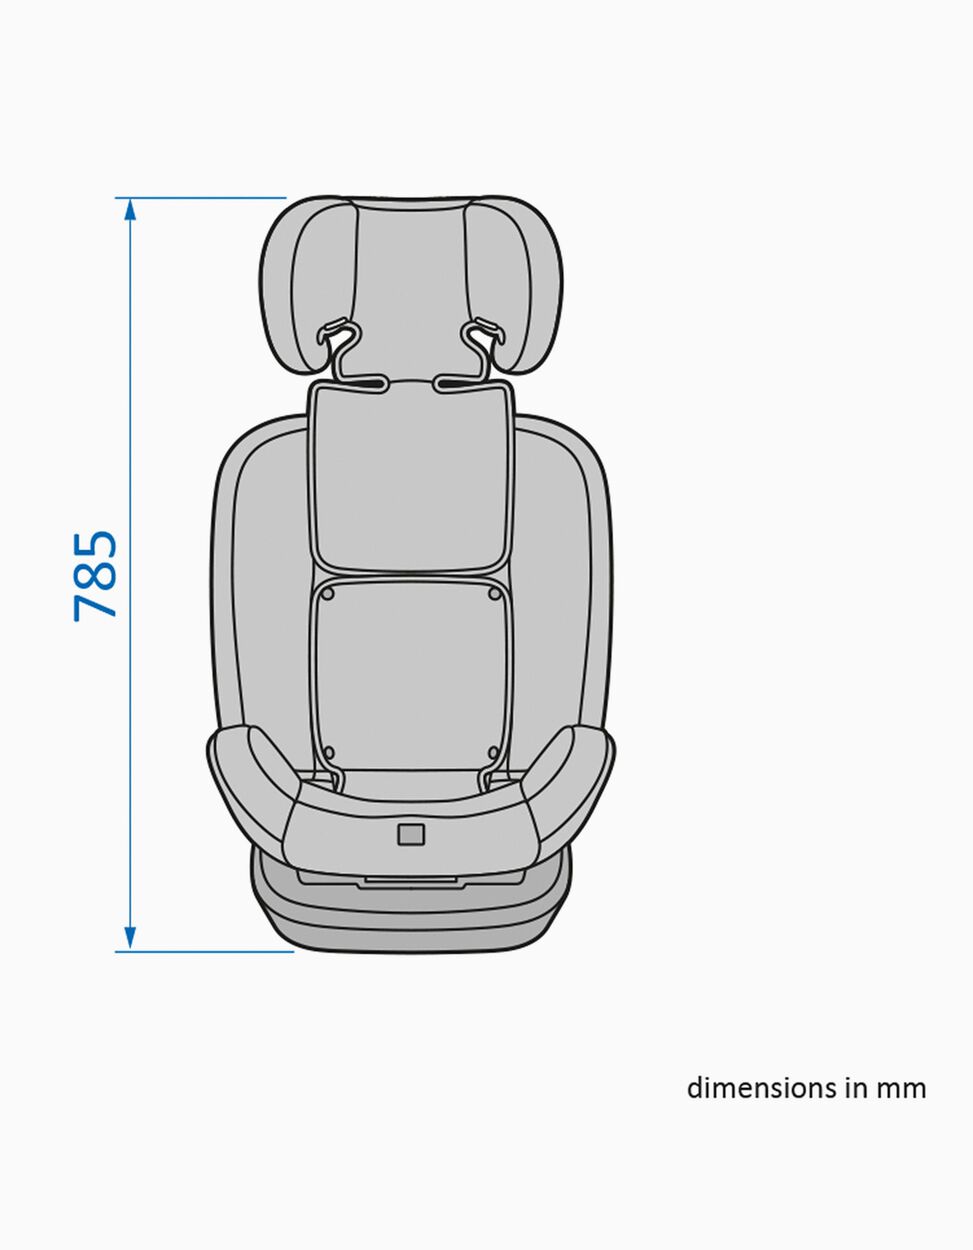 Car Seat I-Size Bebe Confort EverFix, Black Mist